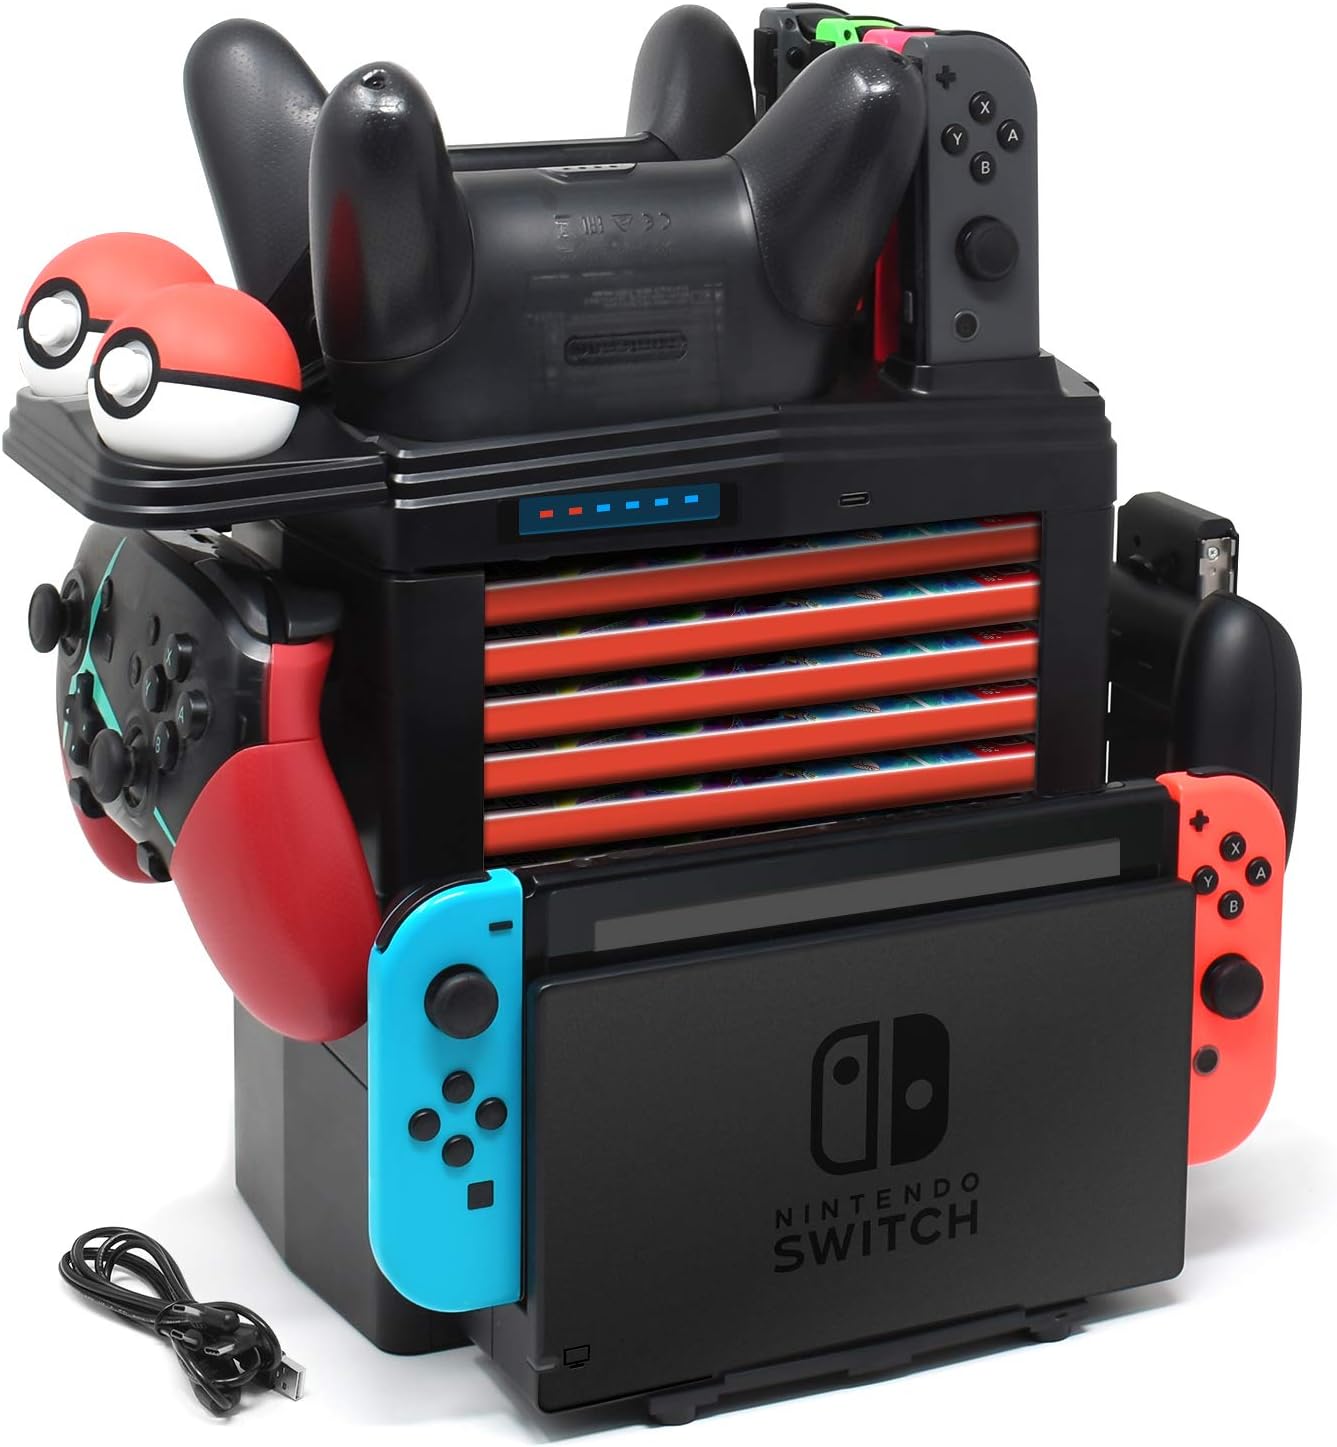 Nintendo Switch charging dock